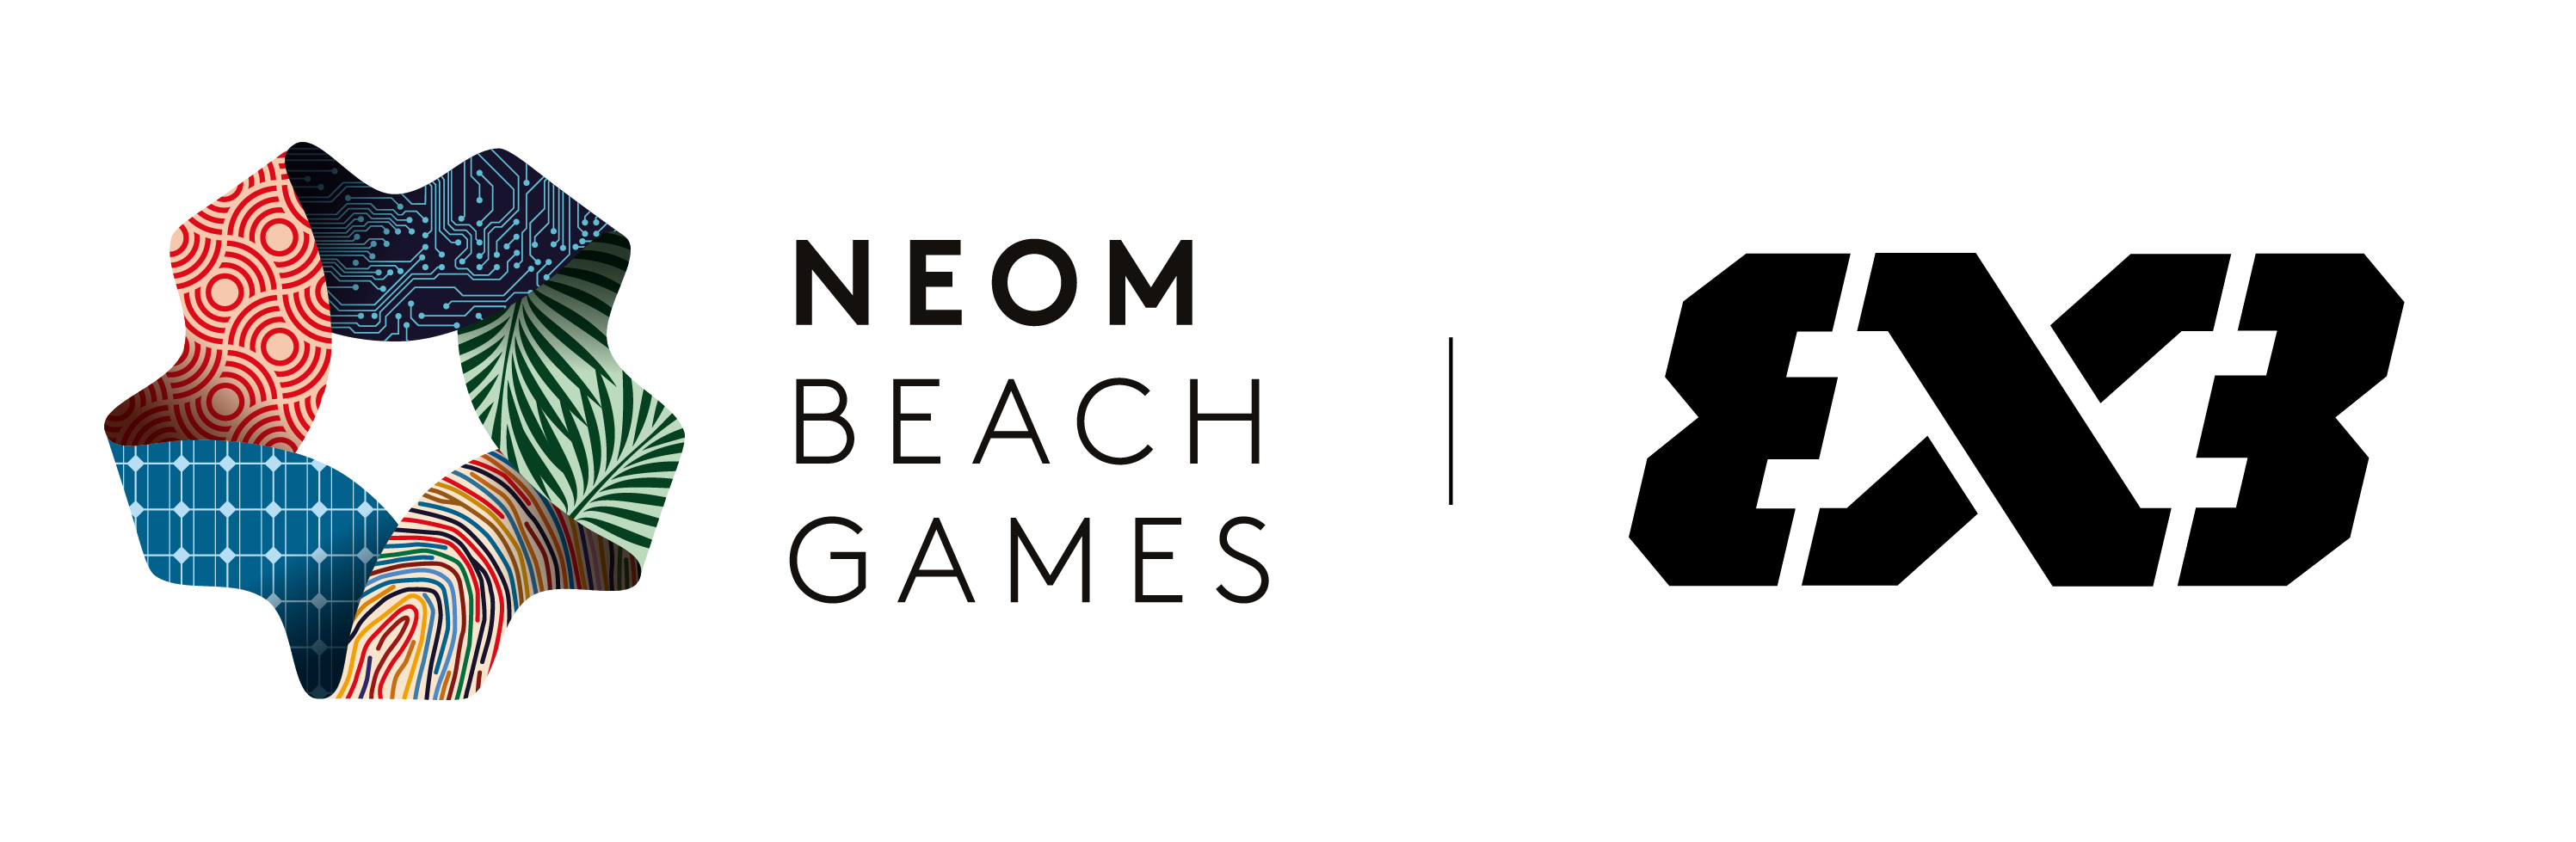 beach games including logo x challanger